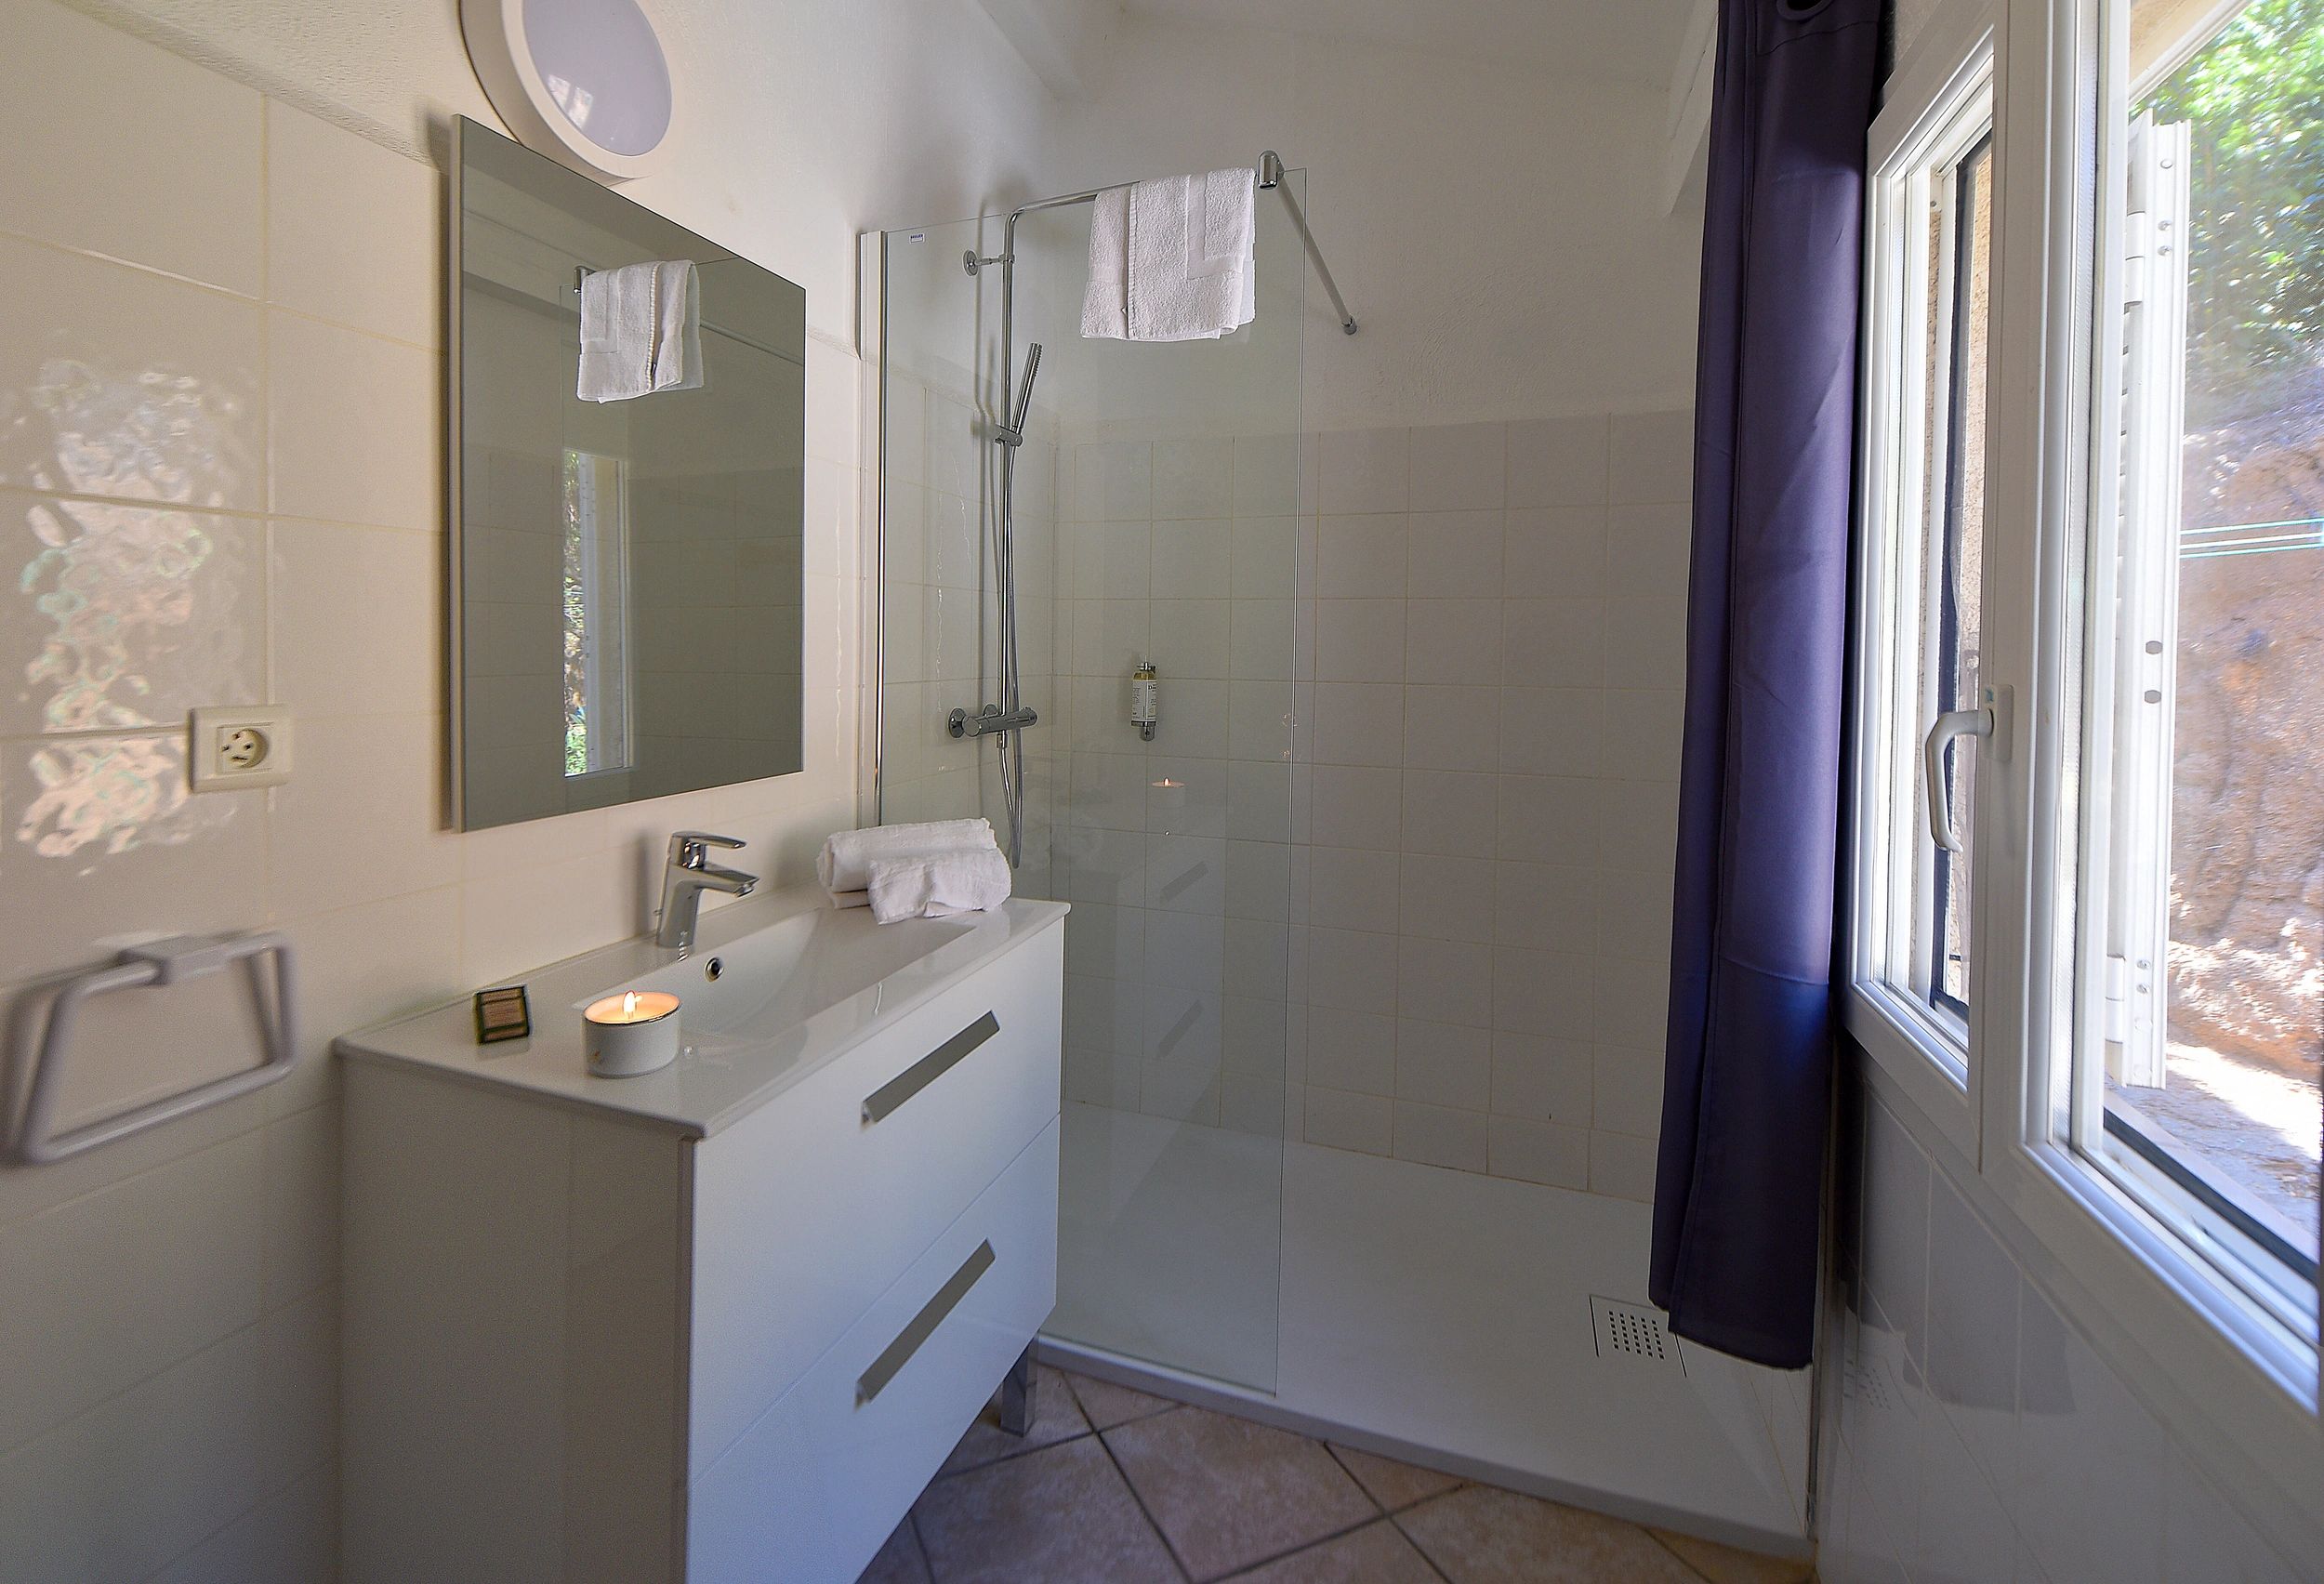 Villa for 4 people in Porto-Vecchio with large bathroom